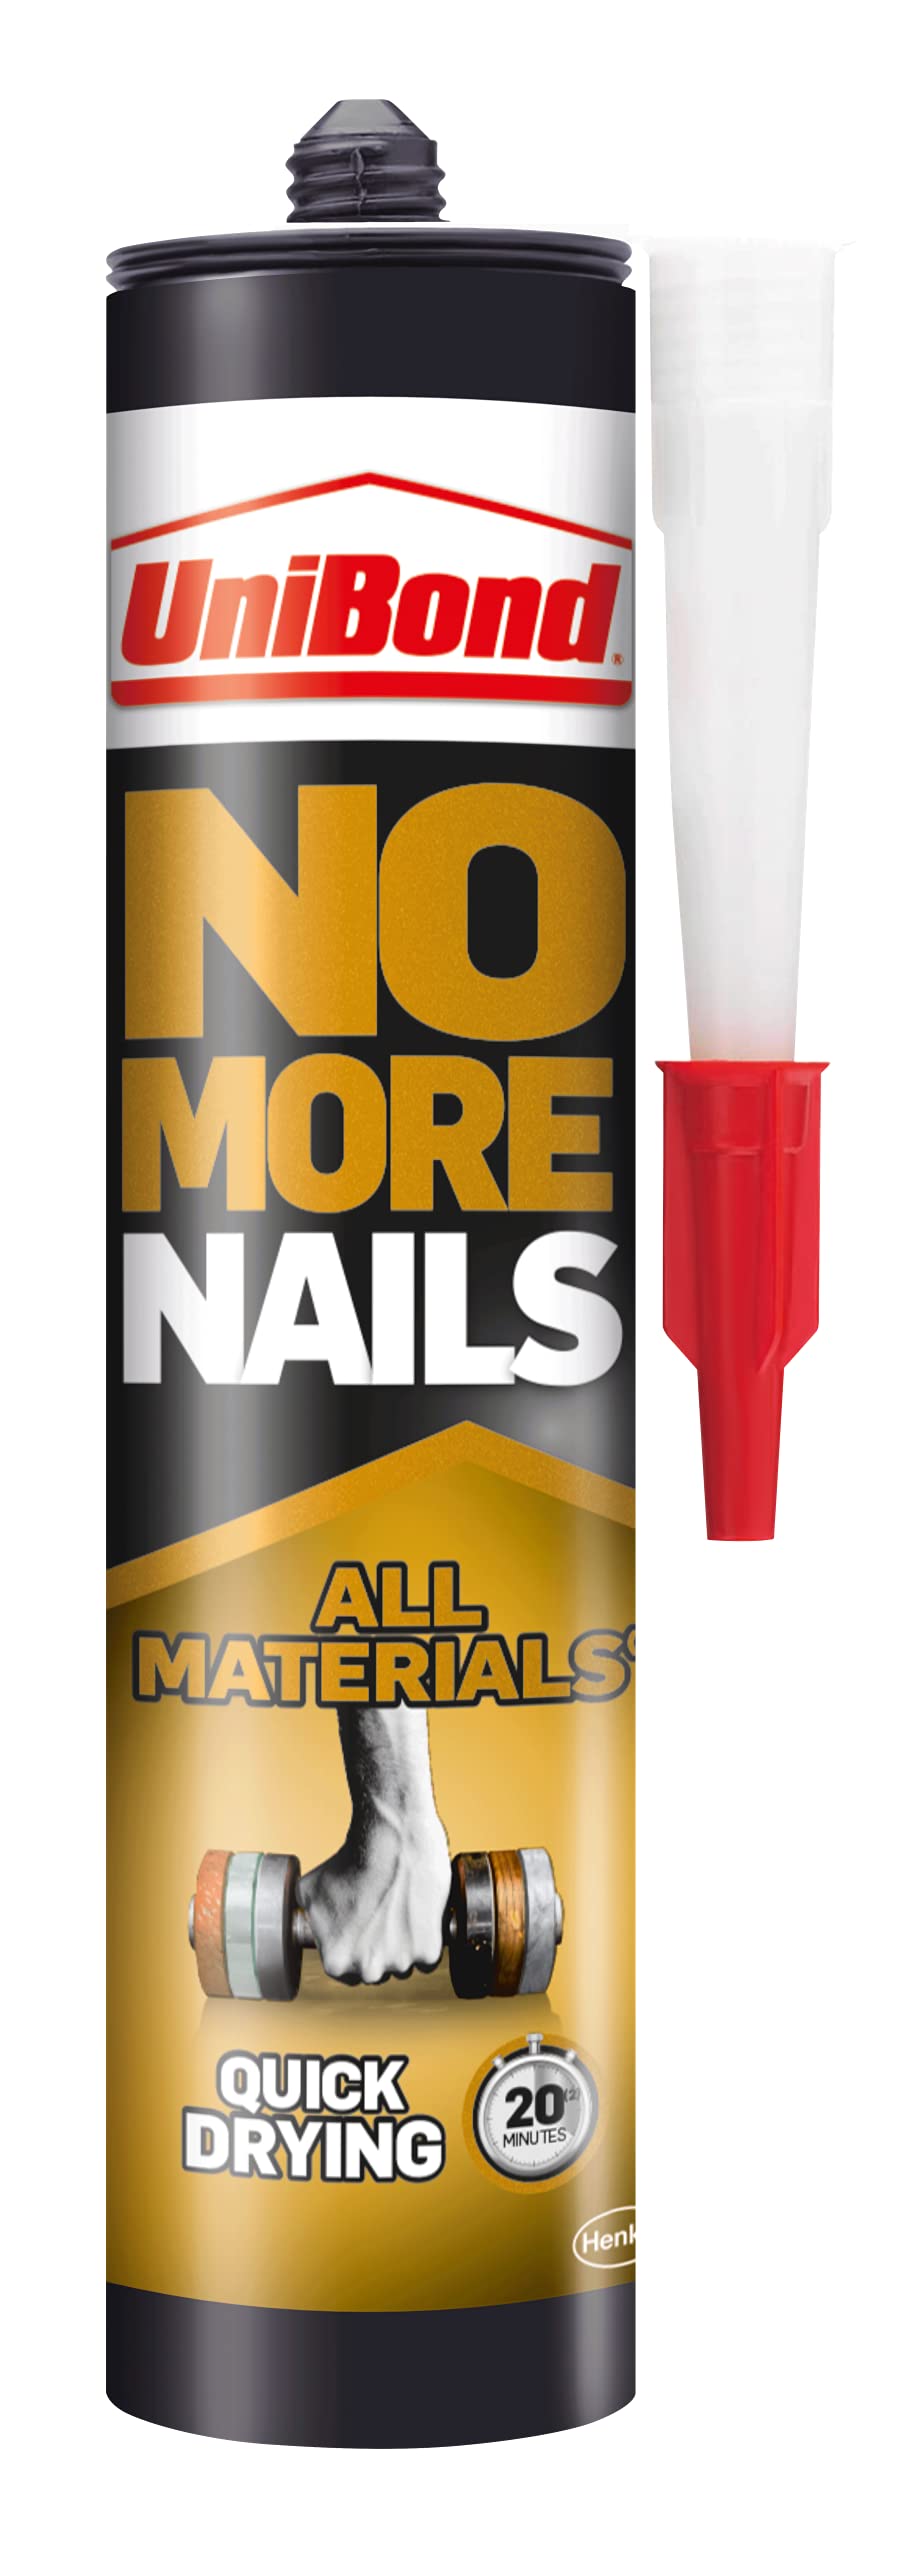 UniBond No More Nails All Materials Quick Drying - 390g